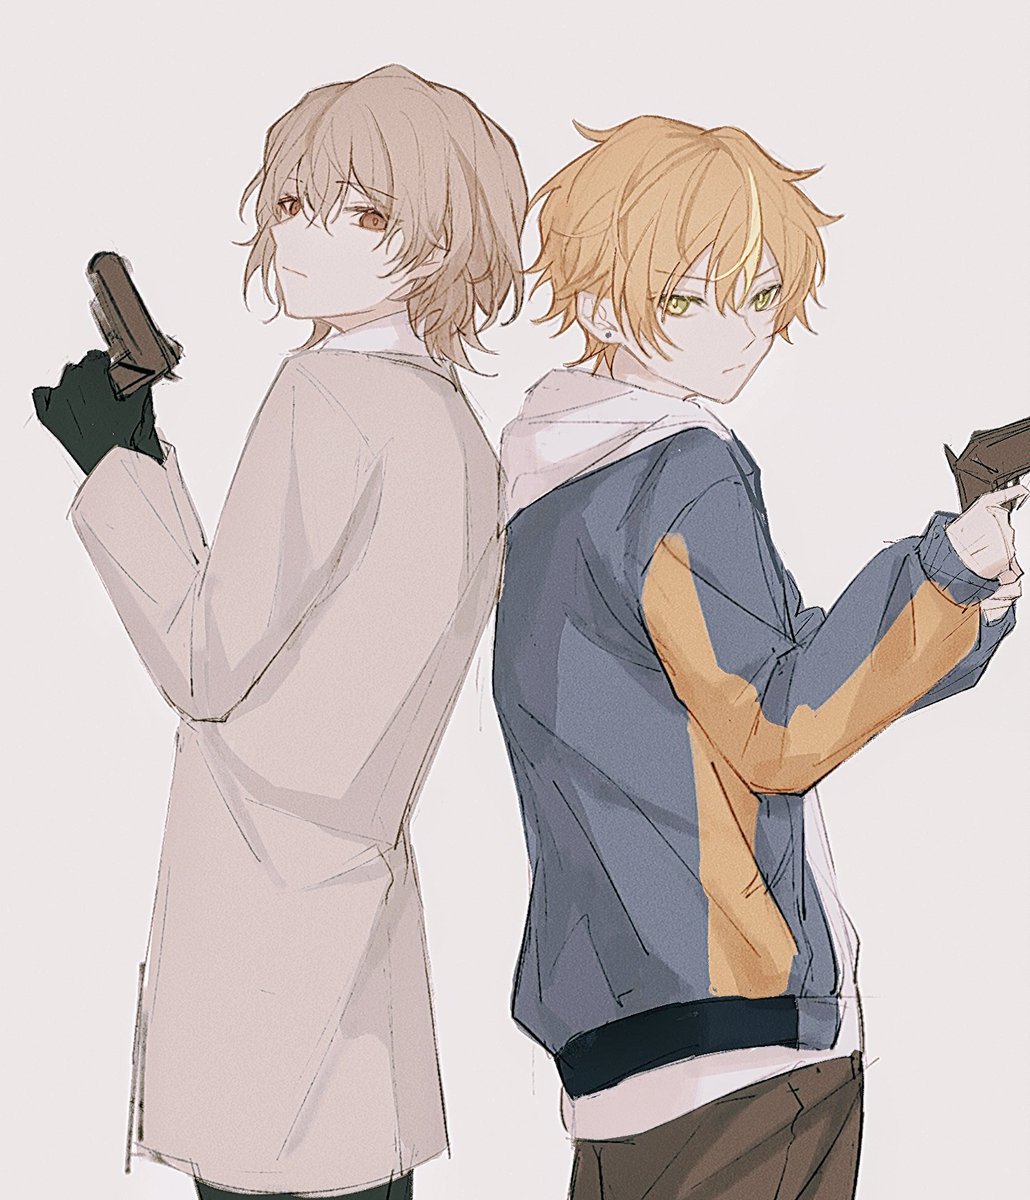 shinonome akito back-to-back multiple boys 2boys weapon holding gun pants  illustration images